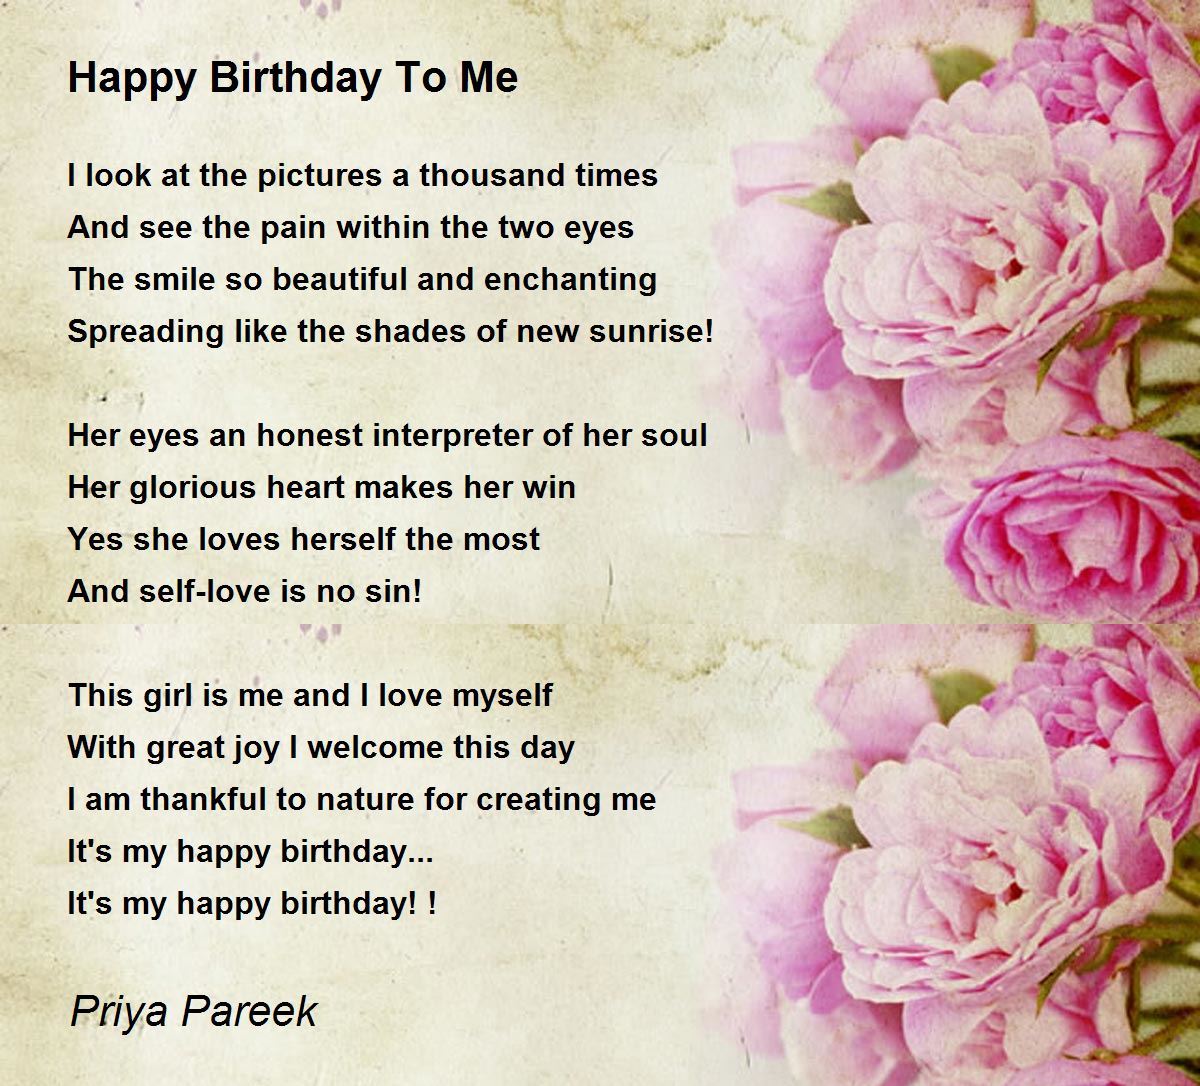 Happy Birthday To Me - Happy Birthday To Me Poem by Priya Pareek